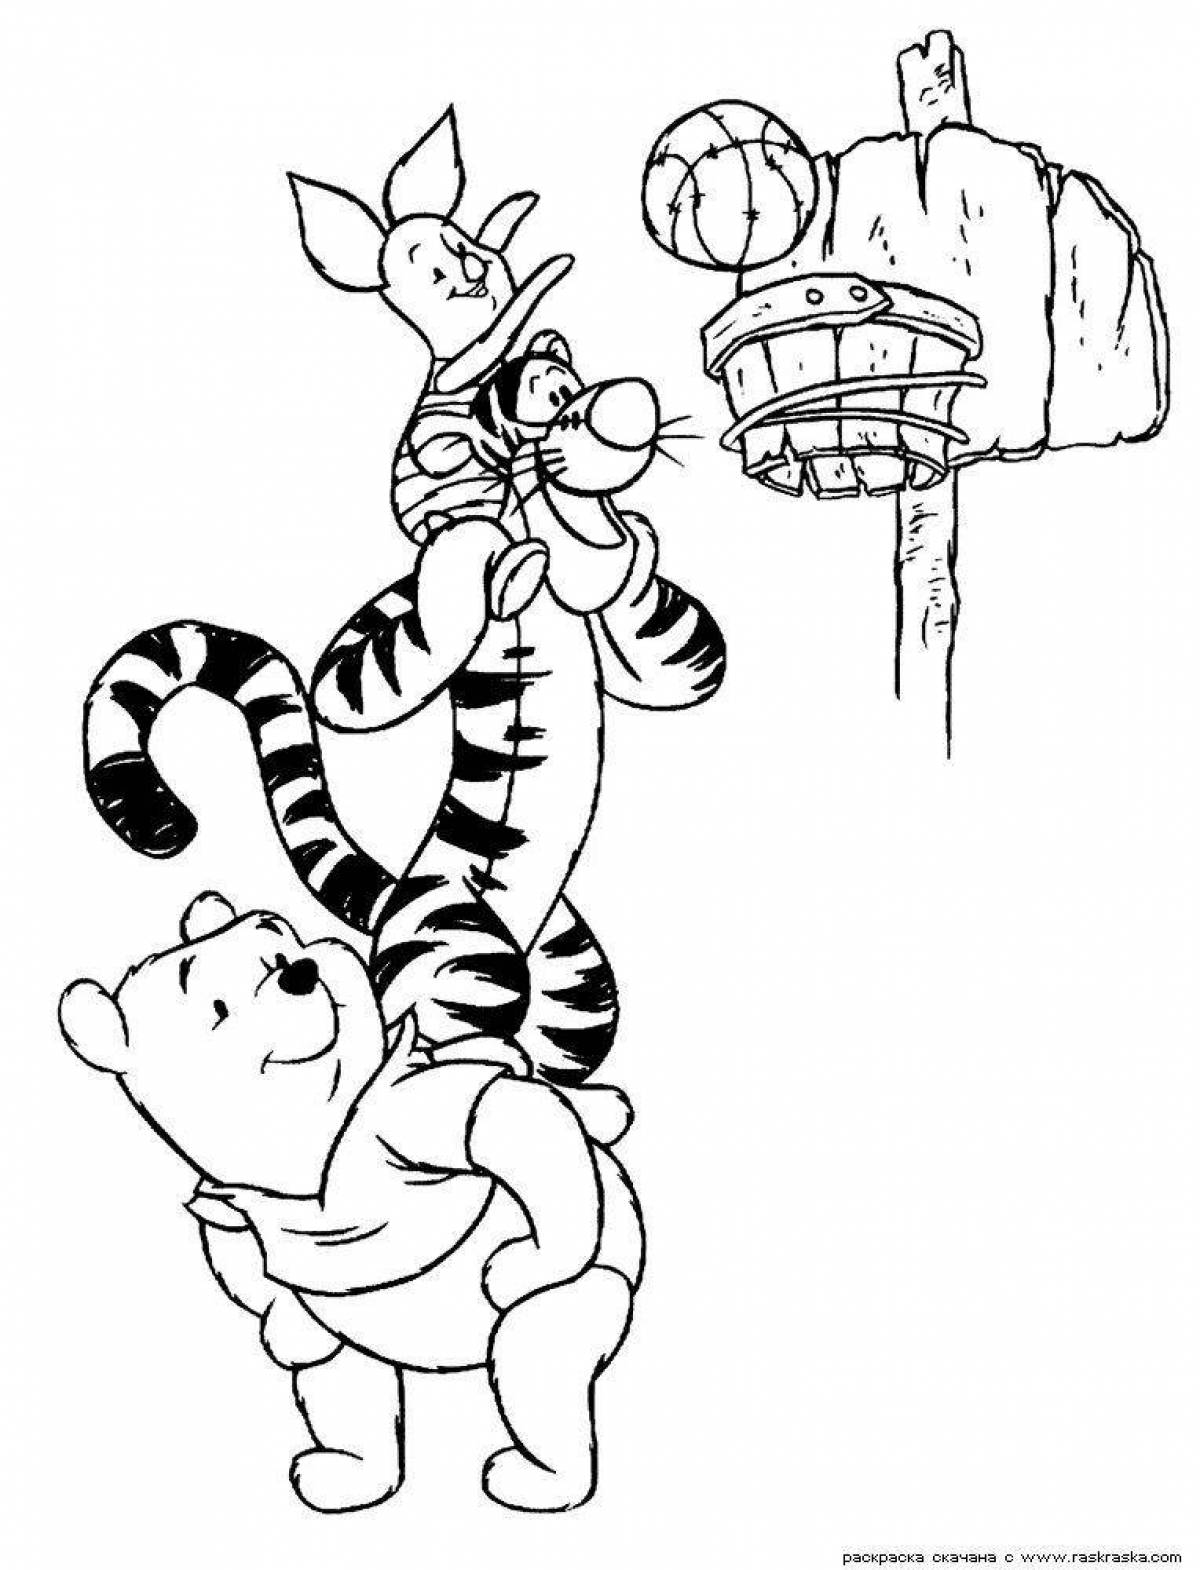 Tigress dynamic coloring page